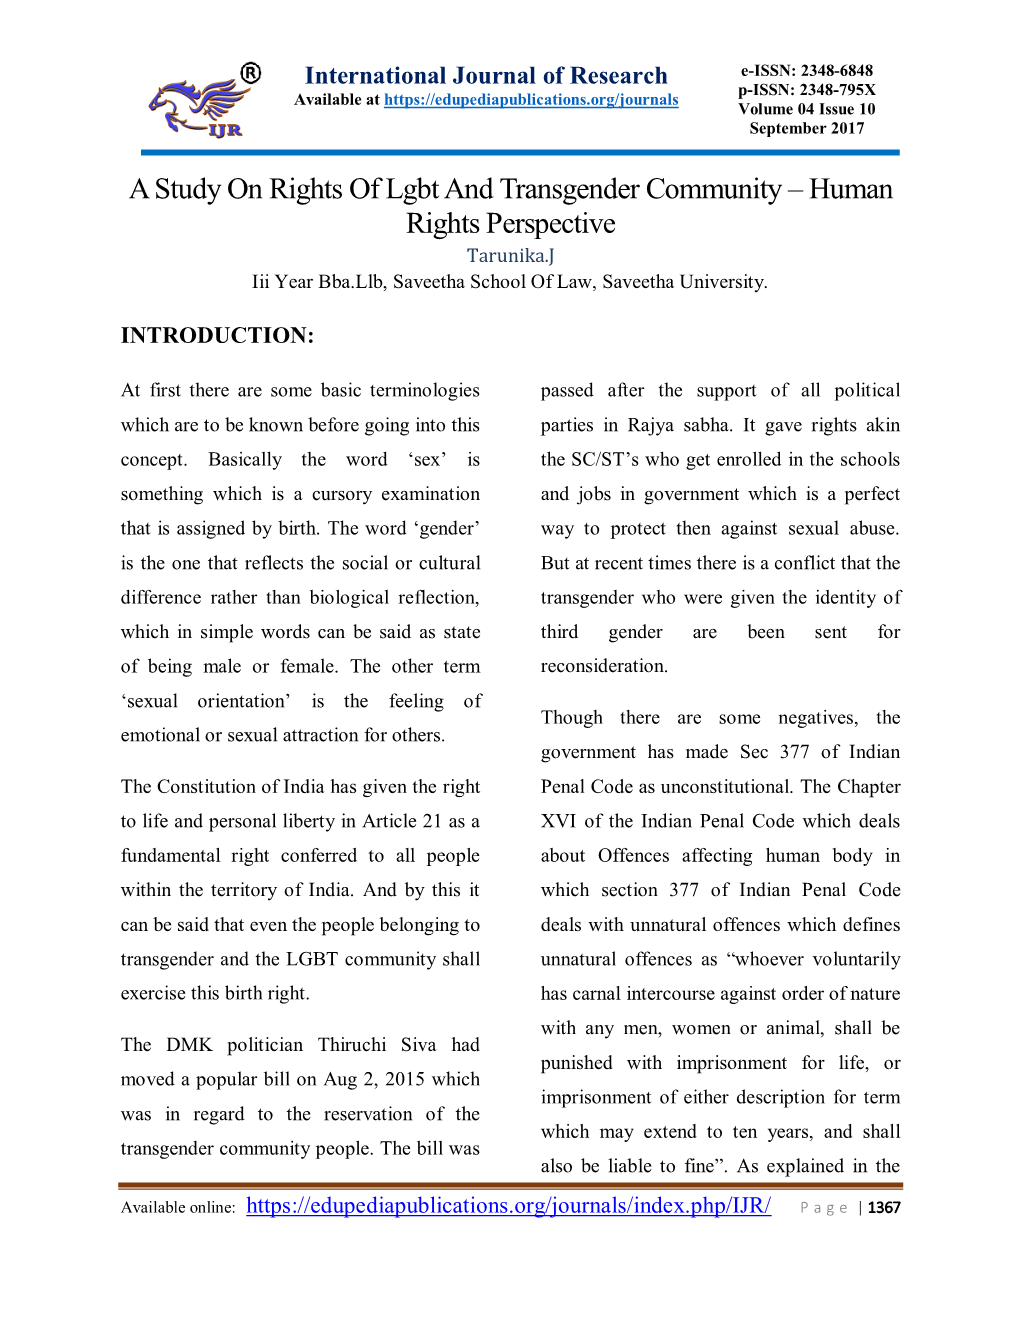 A Study on Rights of Lgbt and Transgender Community – Human Rights Perspective Tarunika.J Iii Year Bba.Llb, Saveetha School of Law, Saveetha University